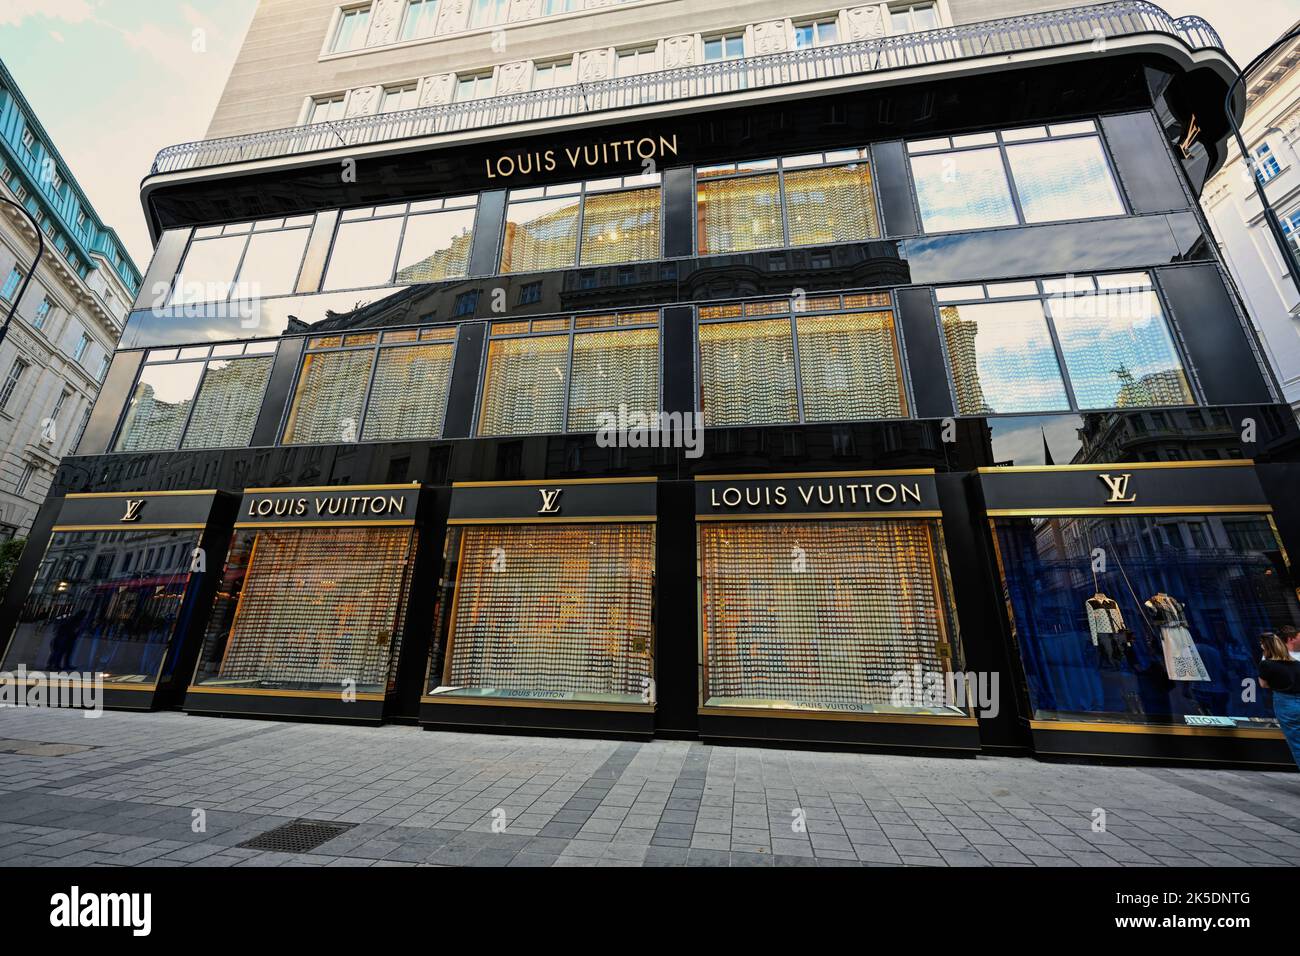 Louis vuitton shop sign window vienna austria hi-res stock